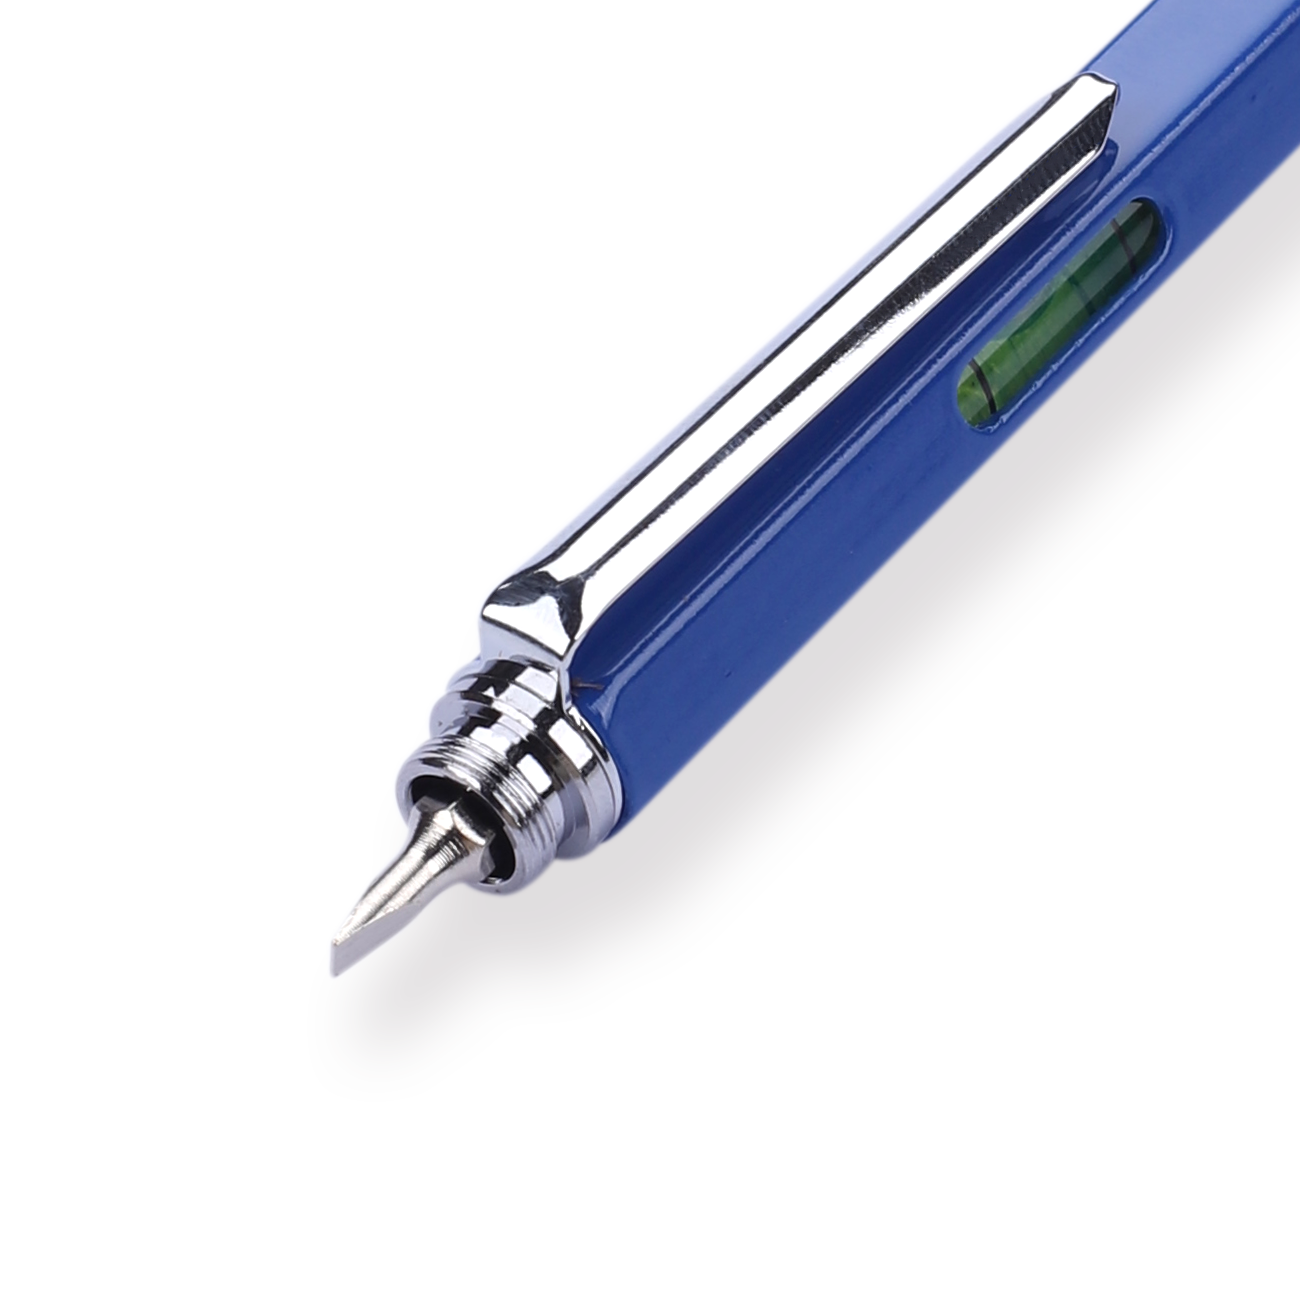 Multi-purpose Tool Pen - 0.5 mm - Blue Body - Stationery Pal